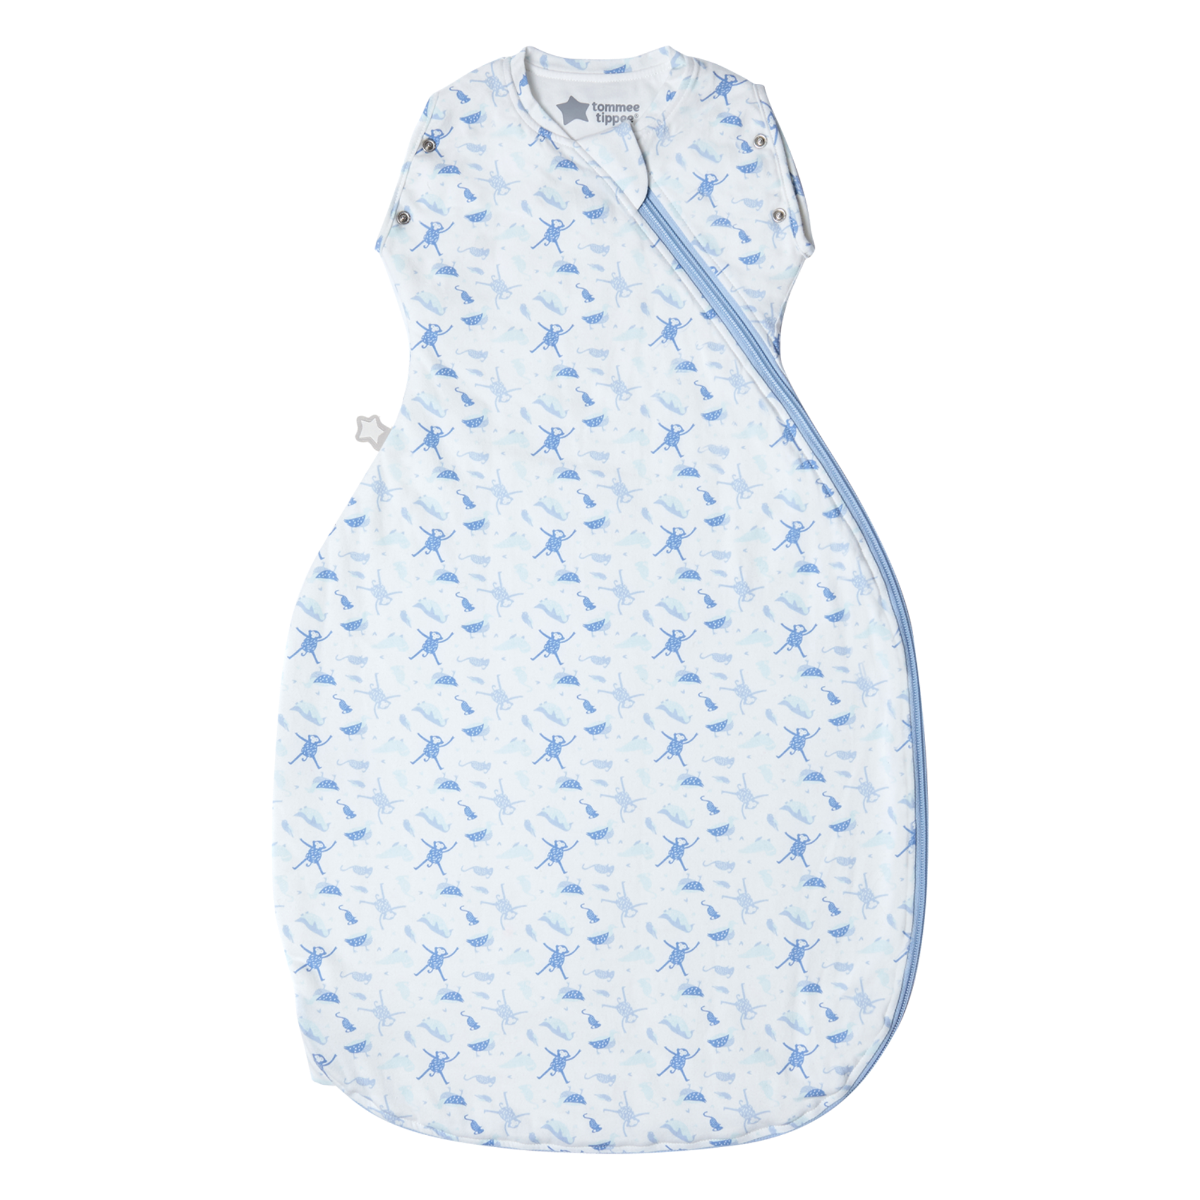 3-9m Tommee Tippee The Original Grobag Newborn Snuggle Baby Sleep Bag 1 Tog Planet Earth